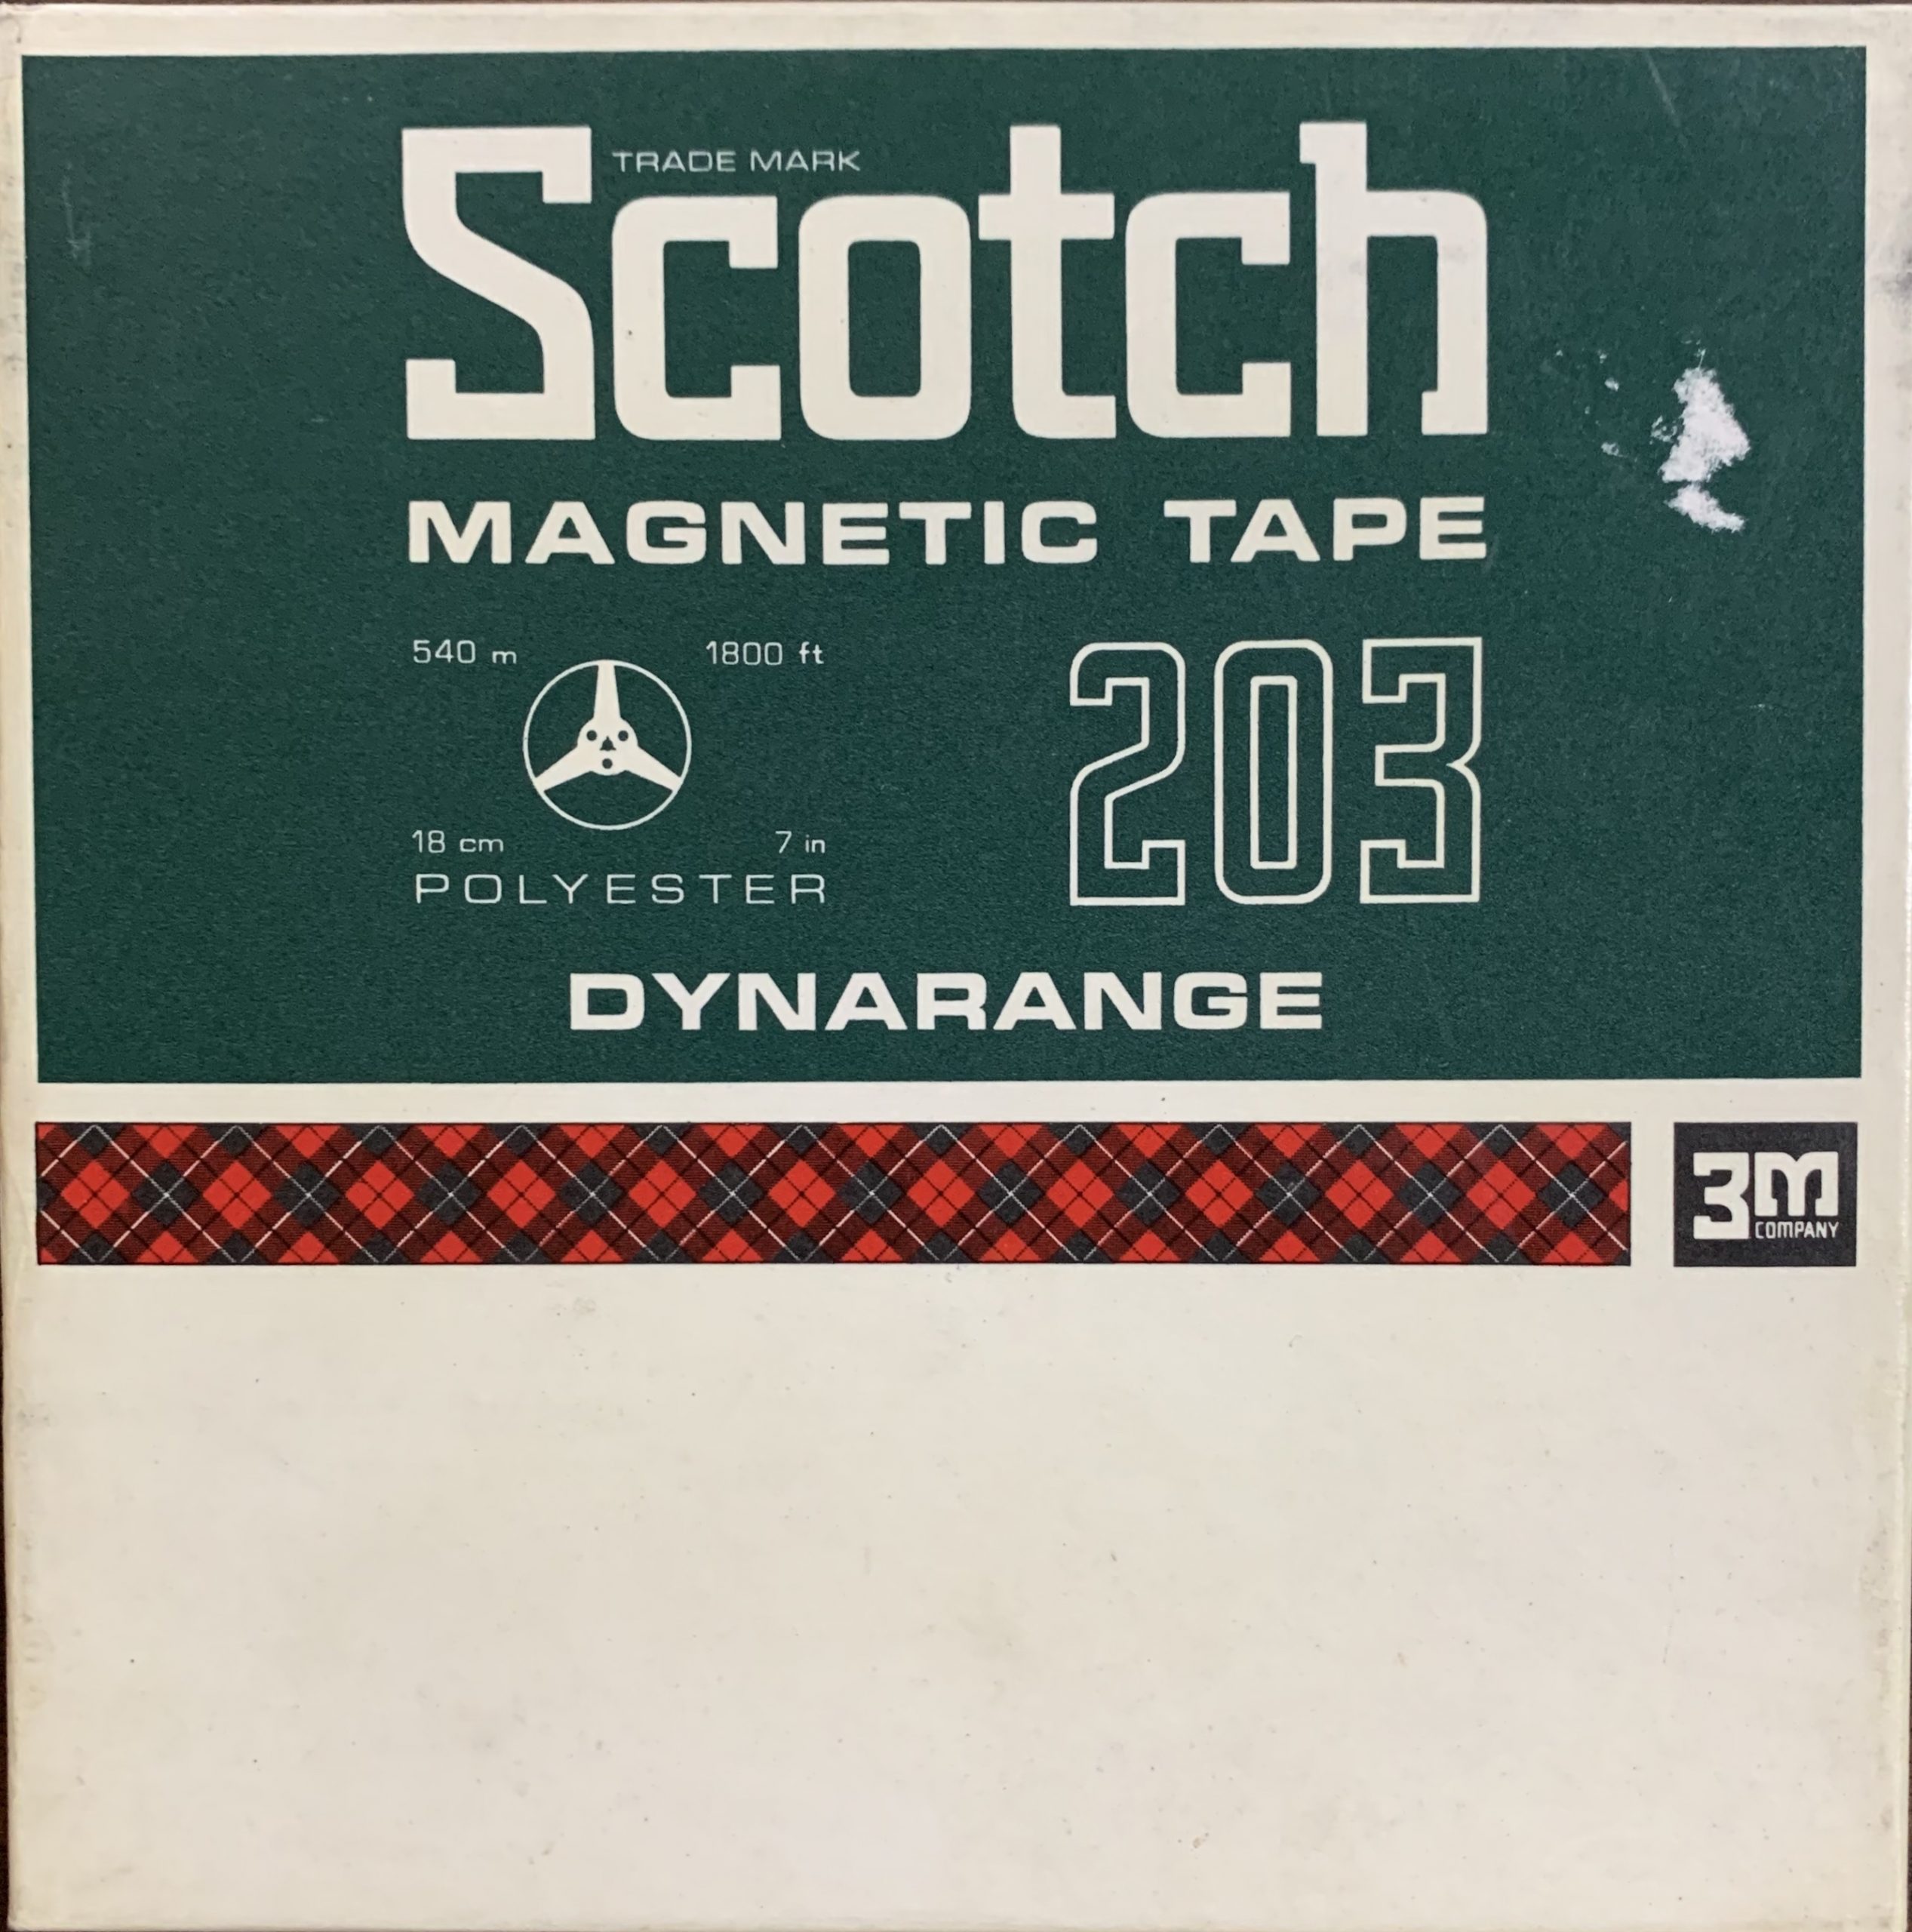 Scotch Italy 203 Dynarange Reel Tape, LP, 7 Reel, 1800 ft, Plastic Box